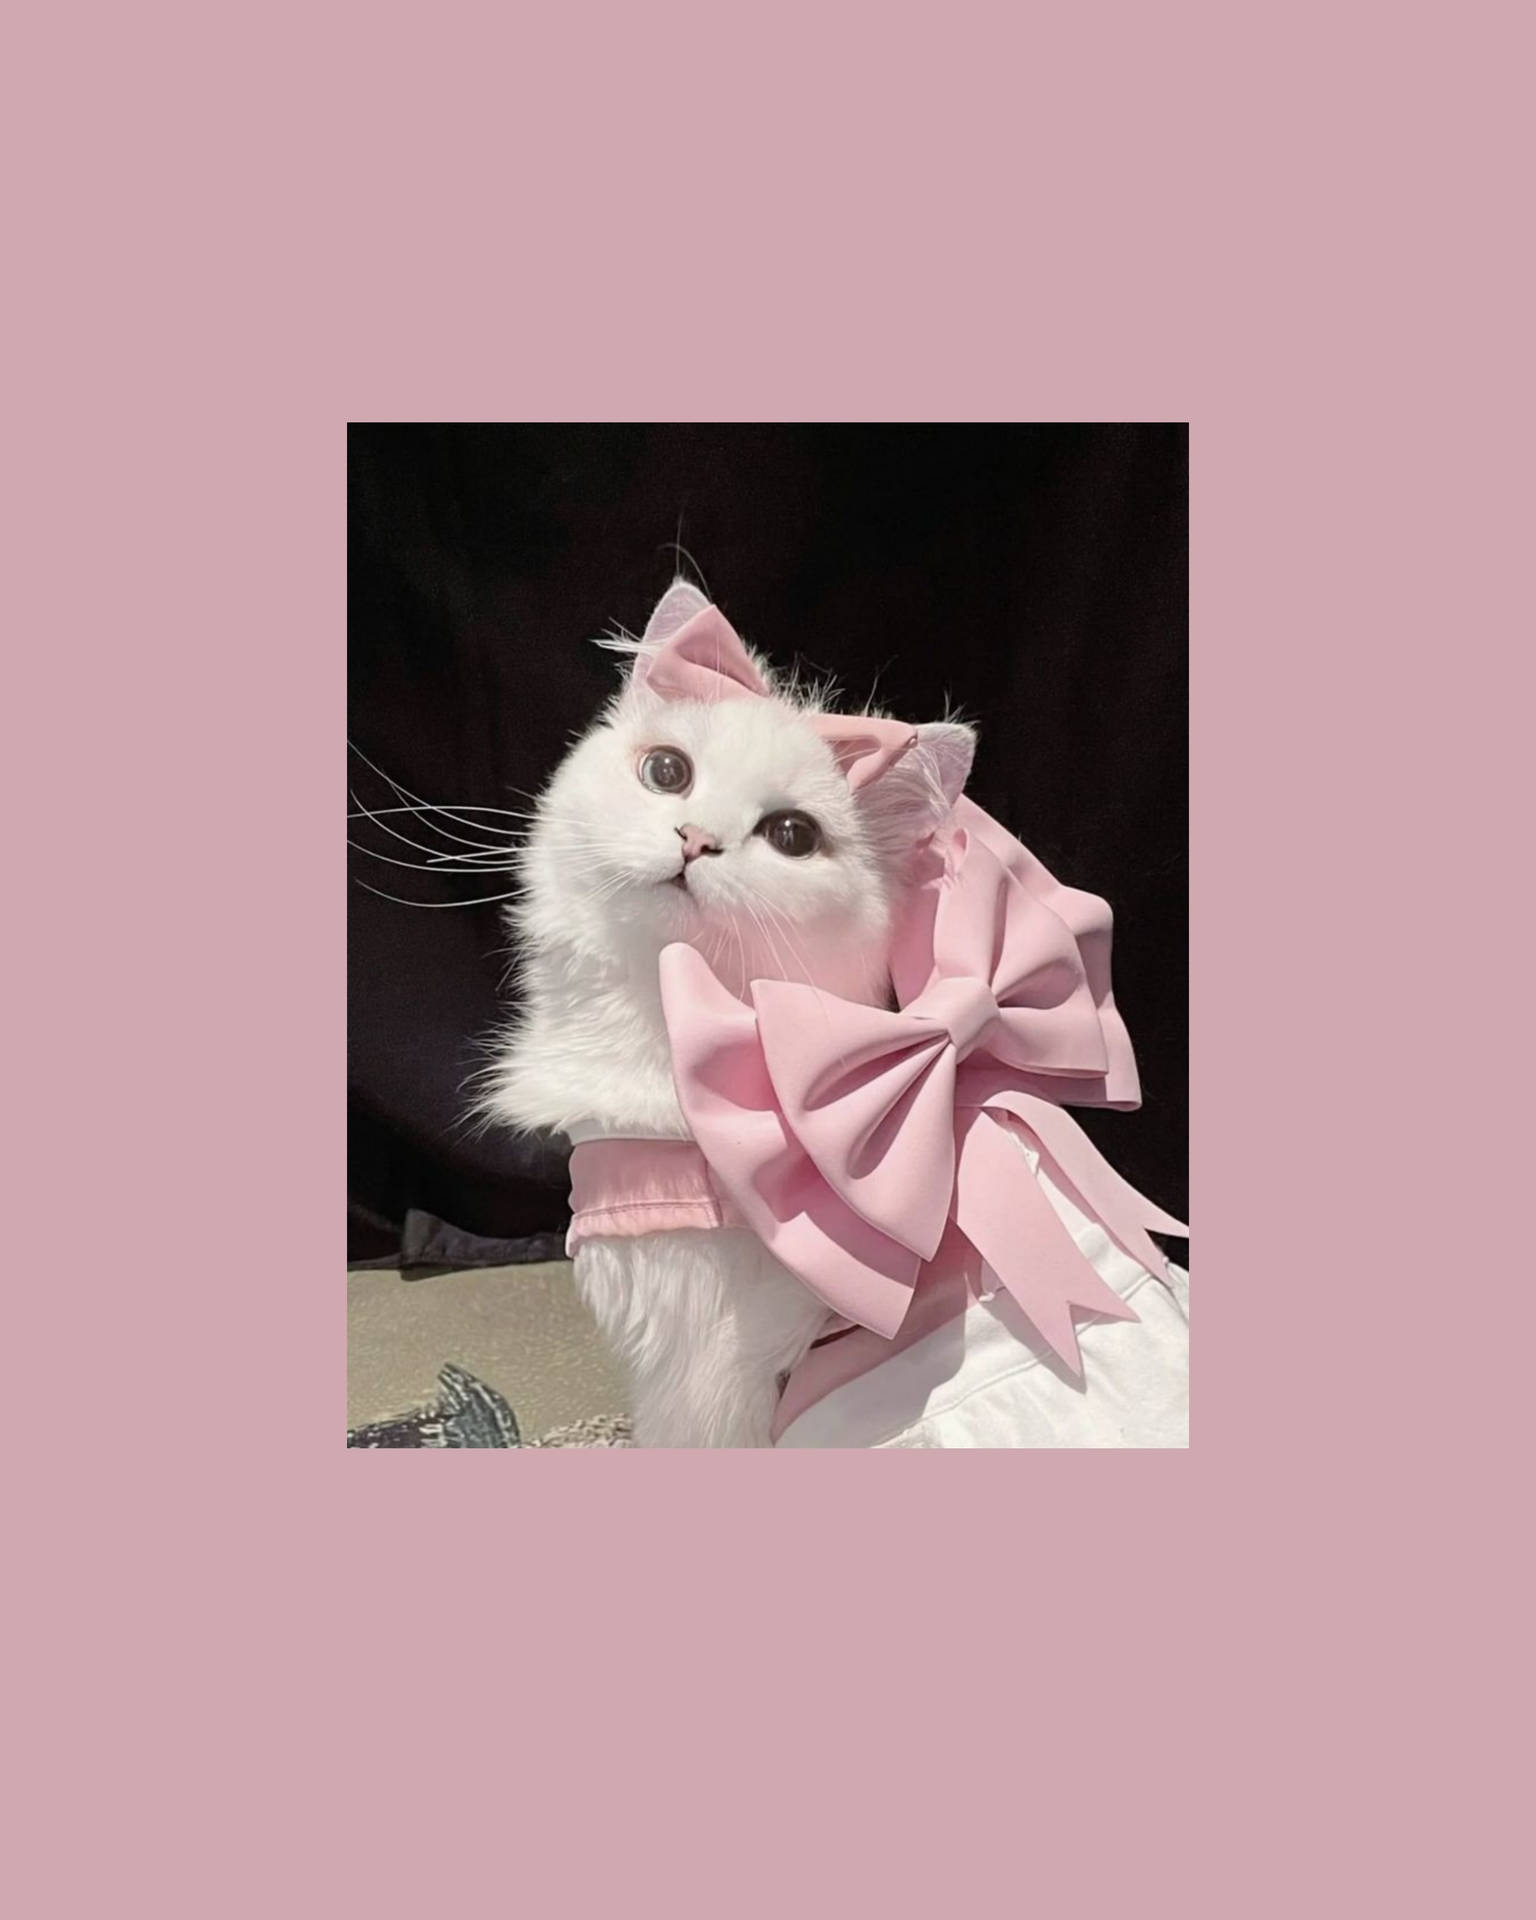 200+] Cute Cat Aesthetic Wallpapers | Wallpapers.com